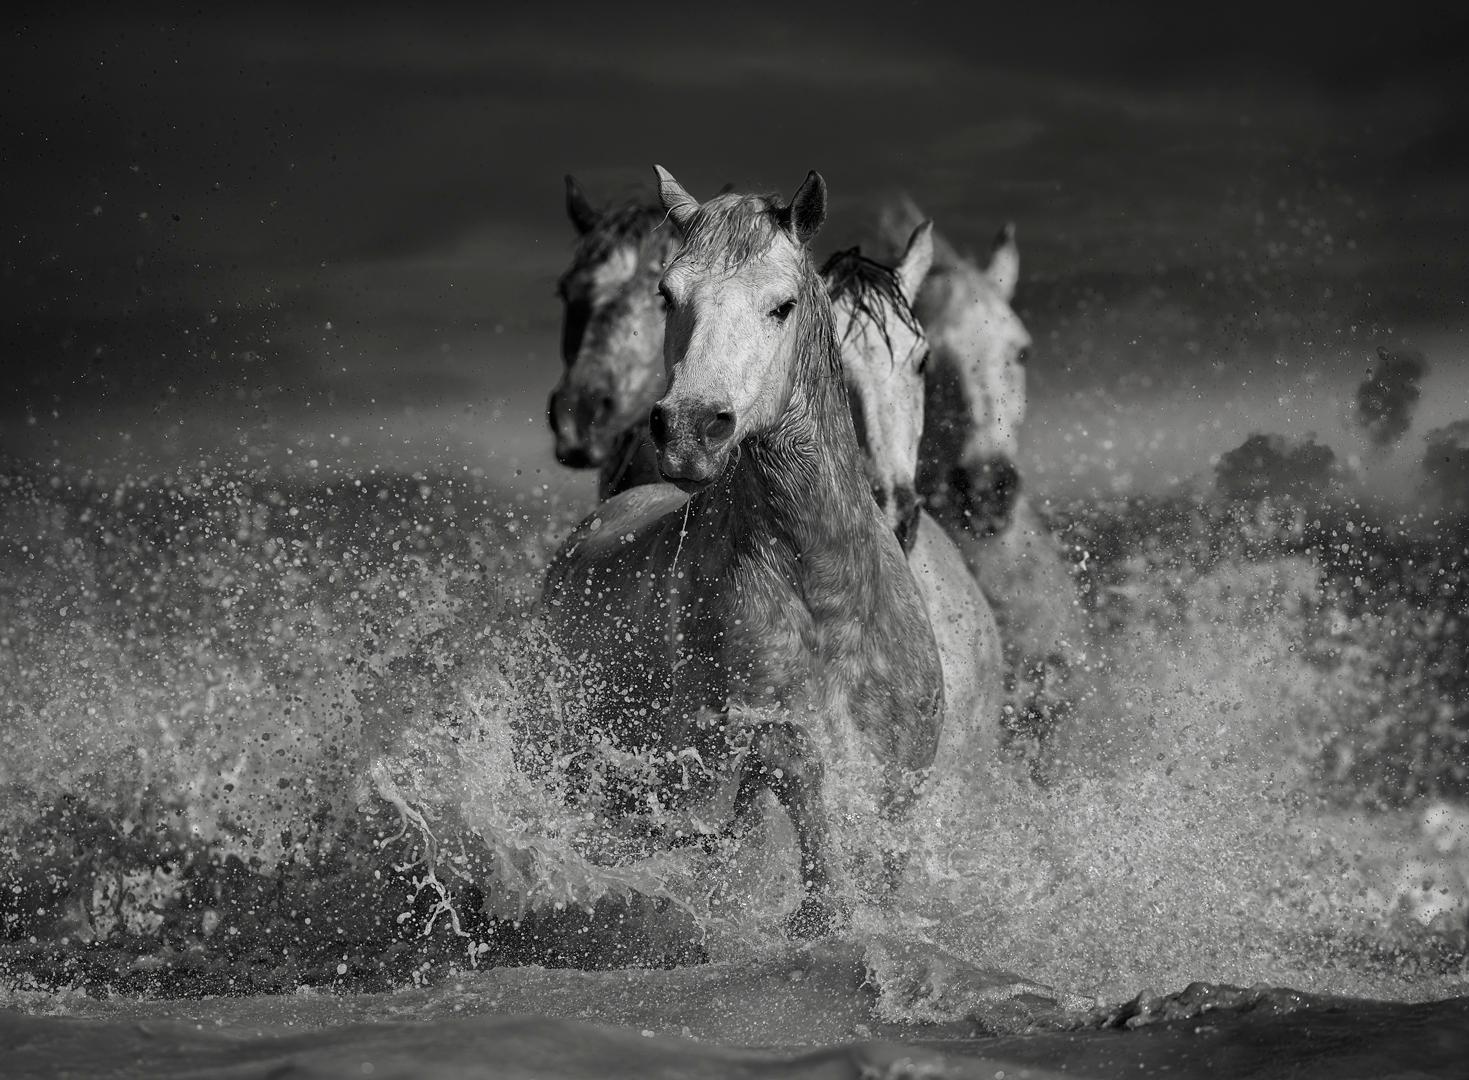 "Fatigue", B&W fine art horse photography - Photograph by Ejaz Khan